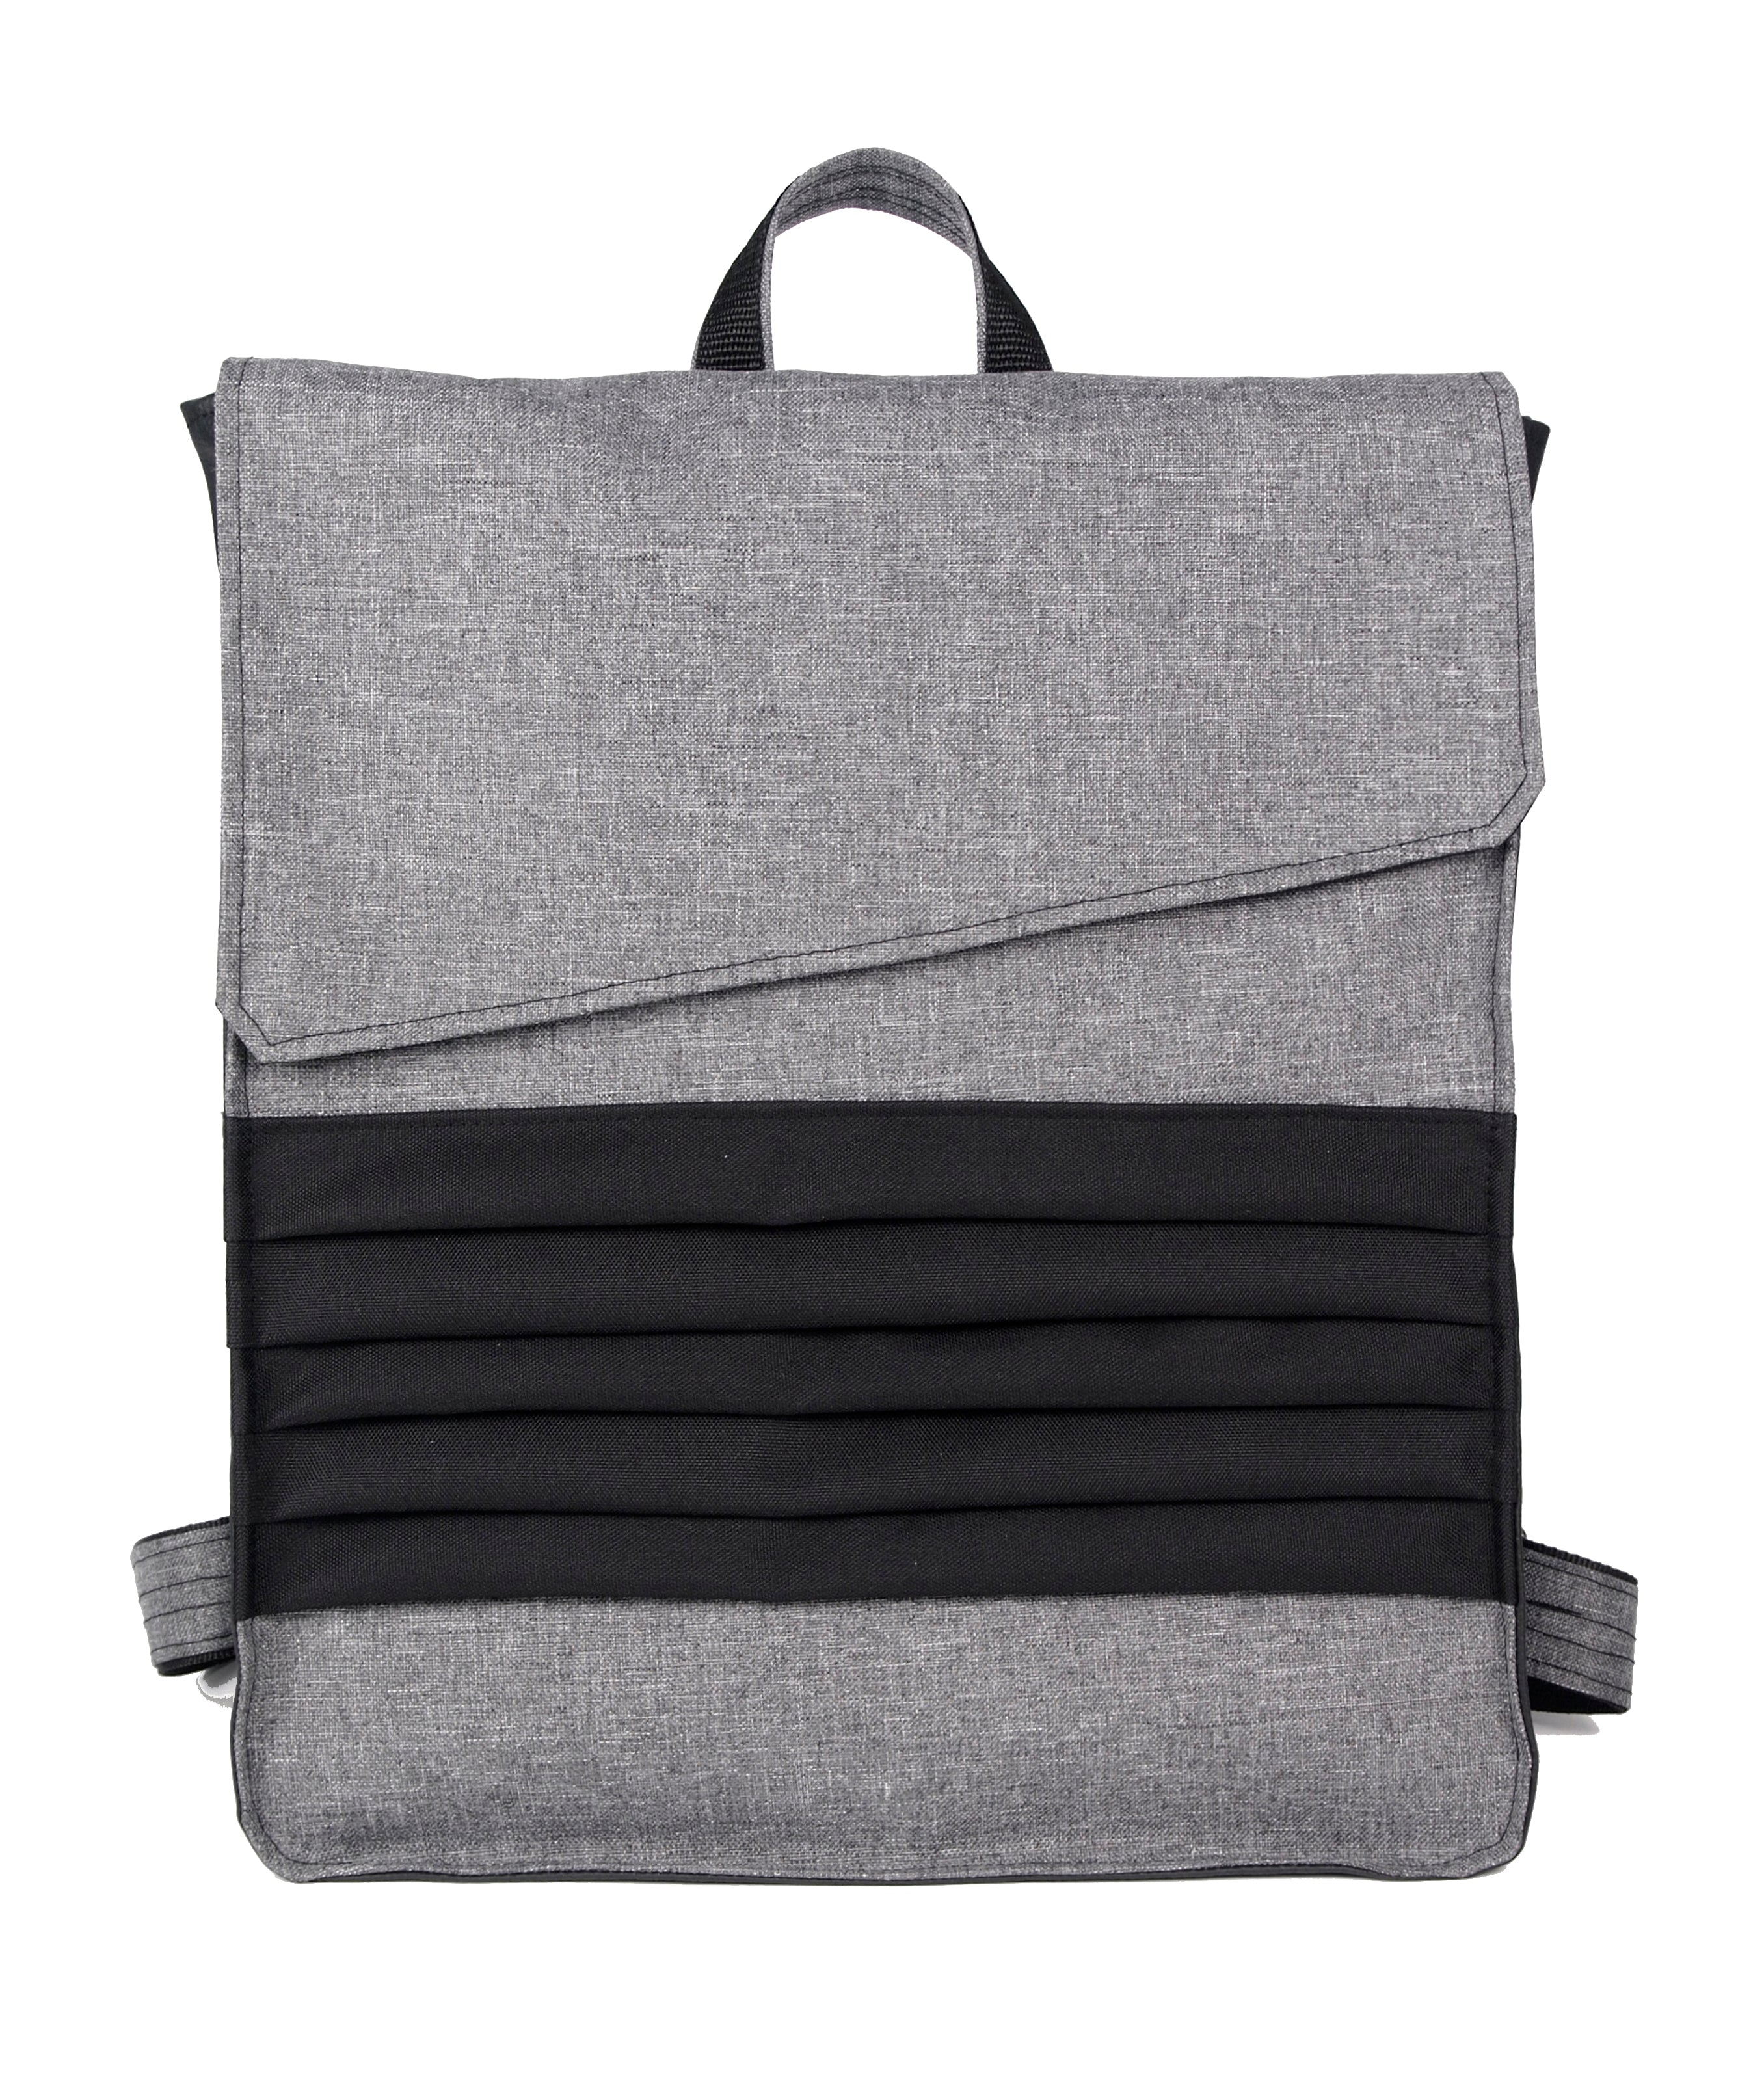 Bardo work backpack - grey - Premium Bardo work backpack from BARDO ART WORKS - Just lvblack, gray, handemade, laptop backpack, unisex, vegan leather, water proof, work160! Shop now at BARDO ART WORKS